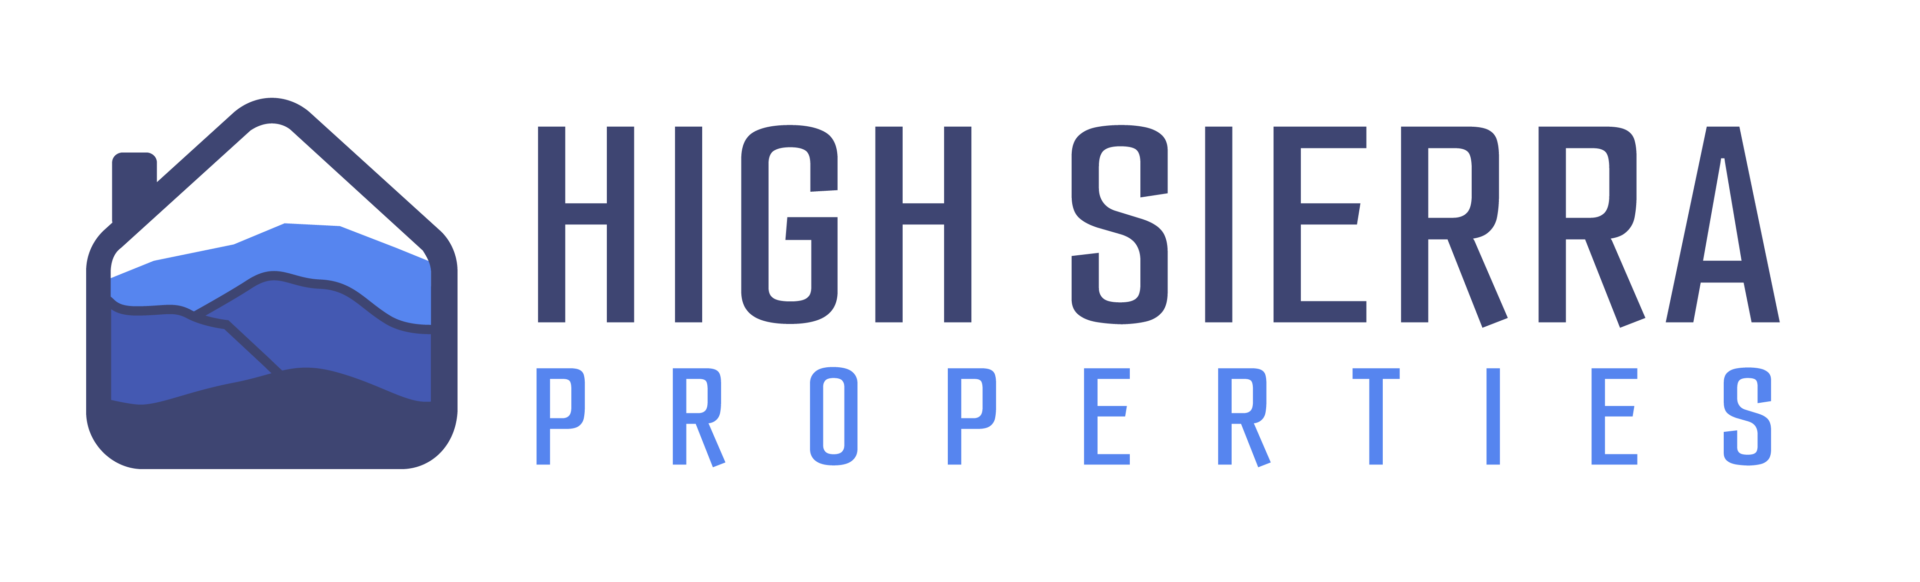 High Sierra Properties logo